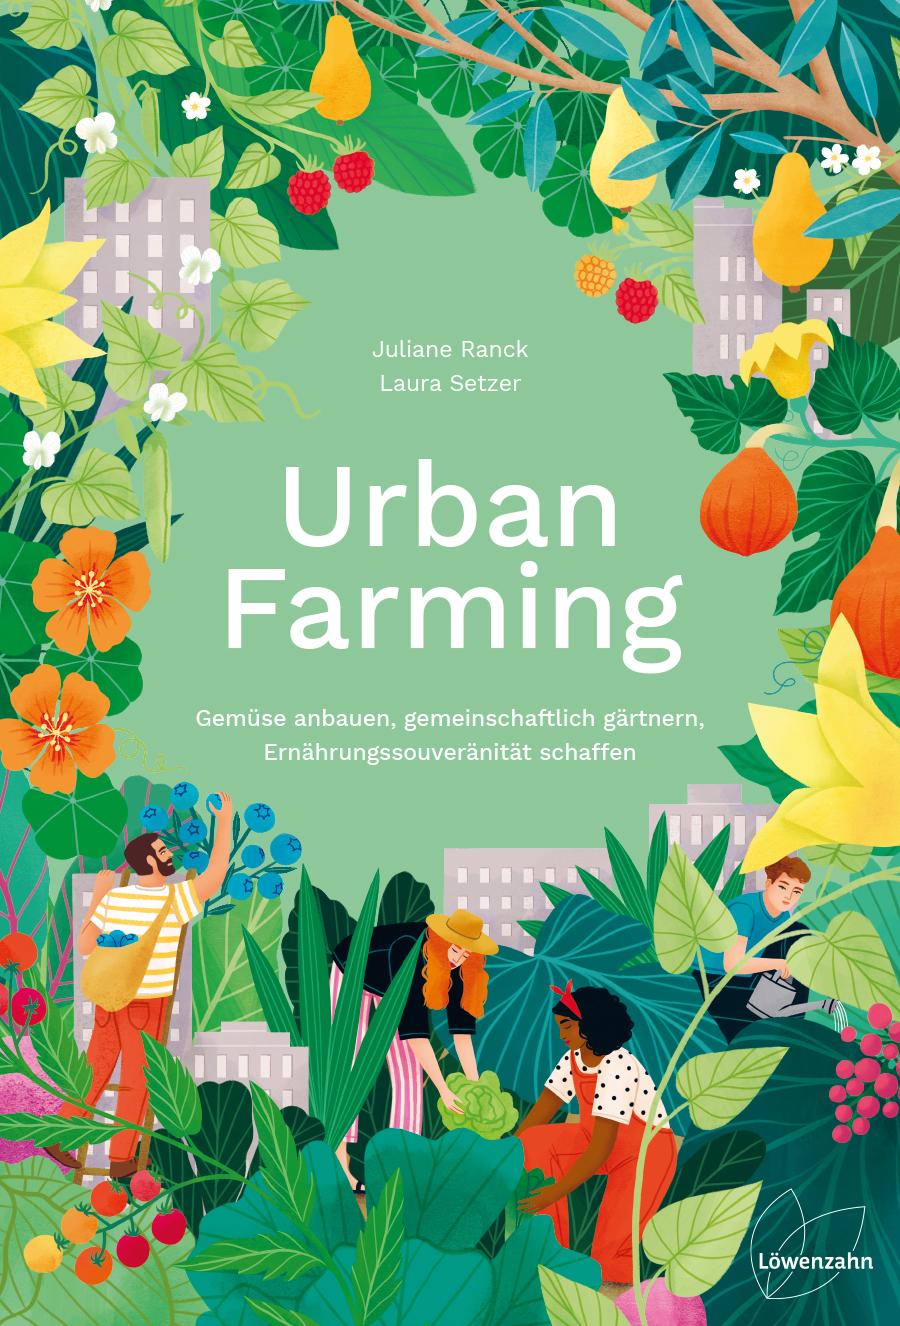 Image for Urban Farming | Juliane Ranck, Laura Setzer | Löwenzahn